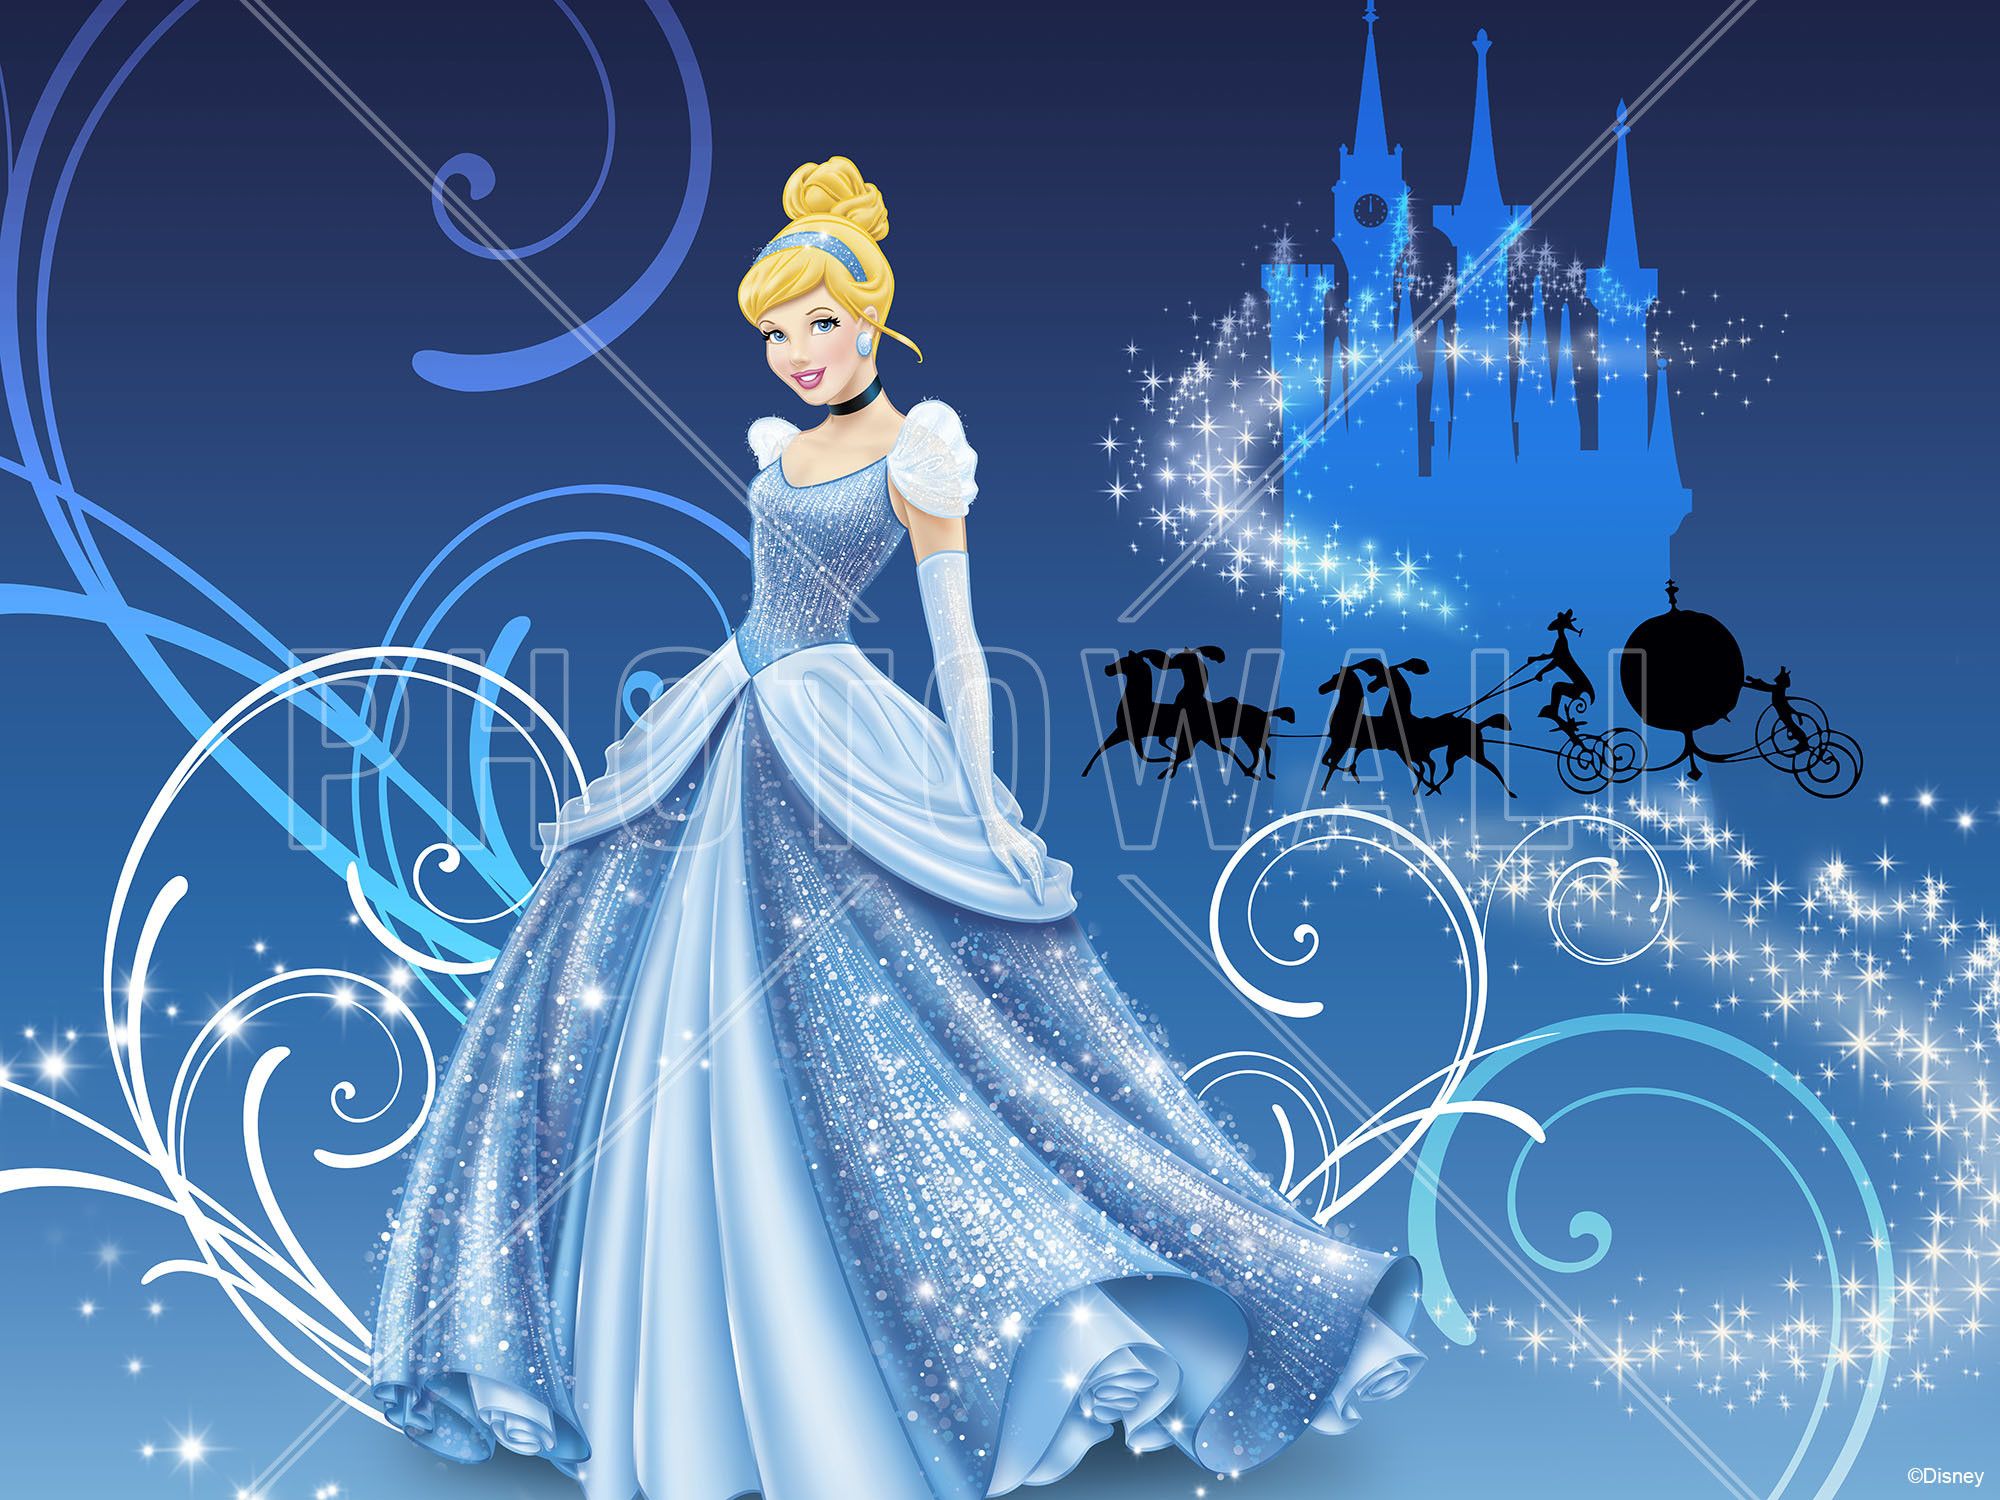 Disney princess cinderella wallpapers